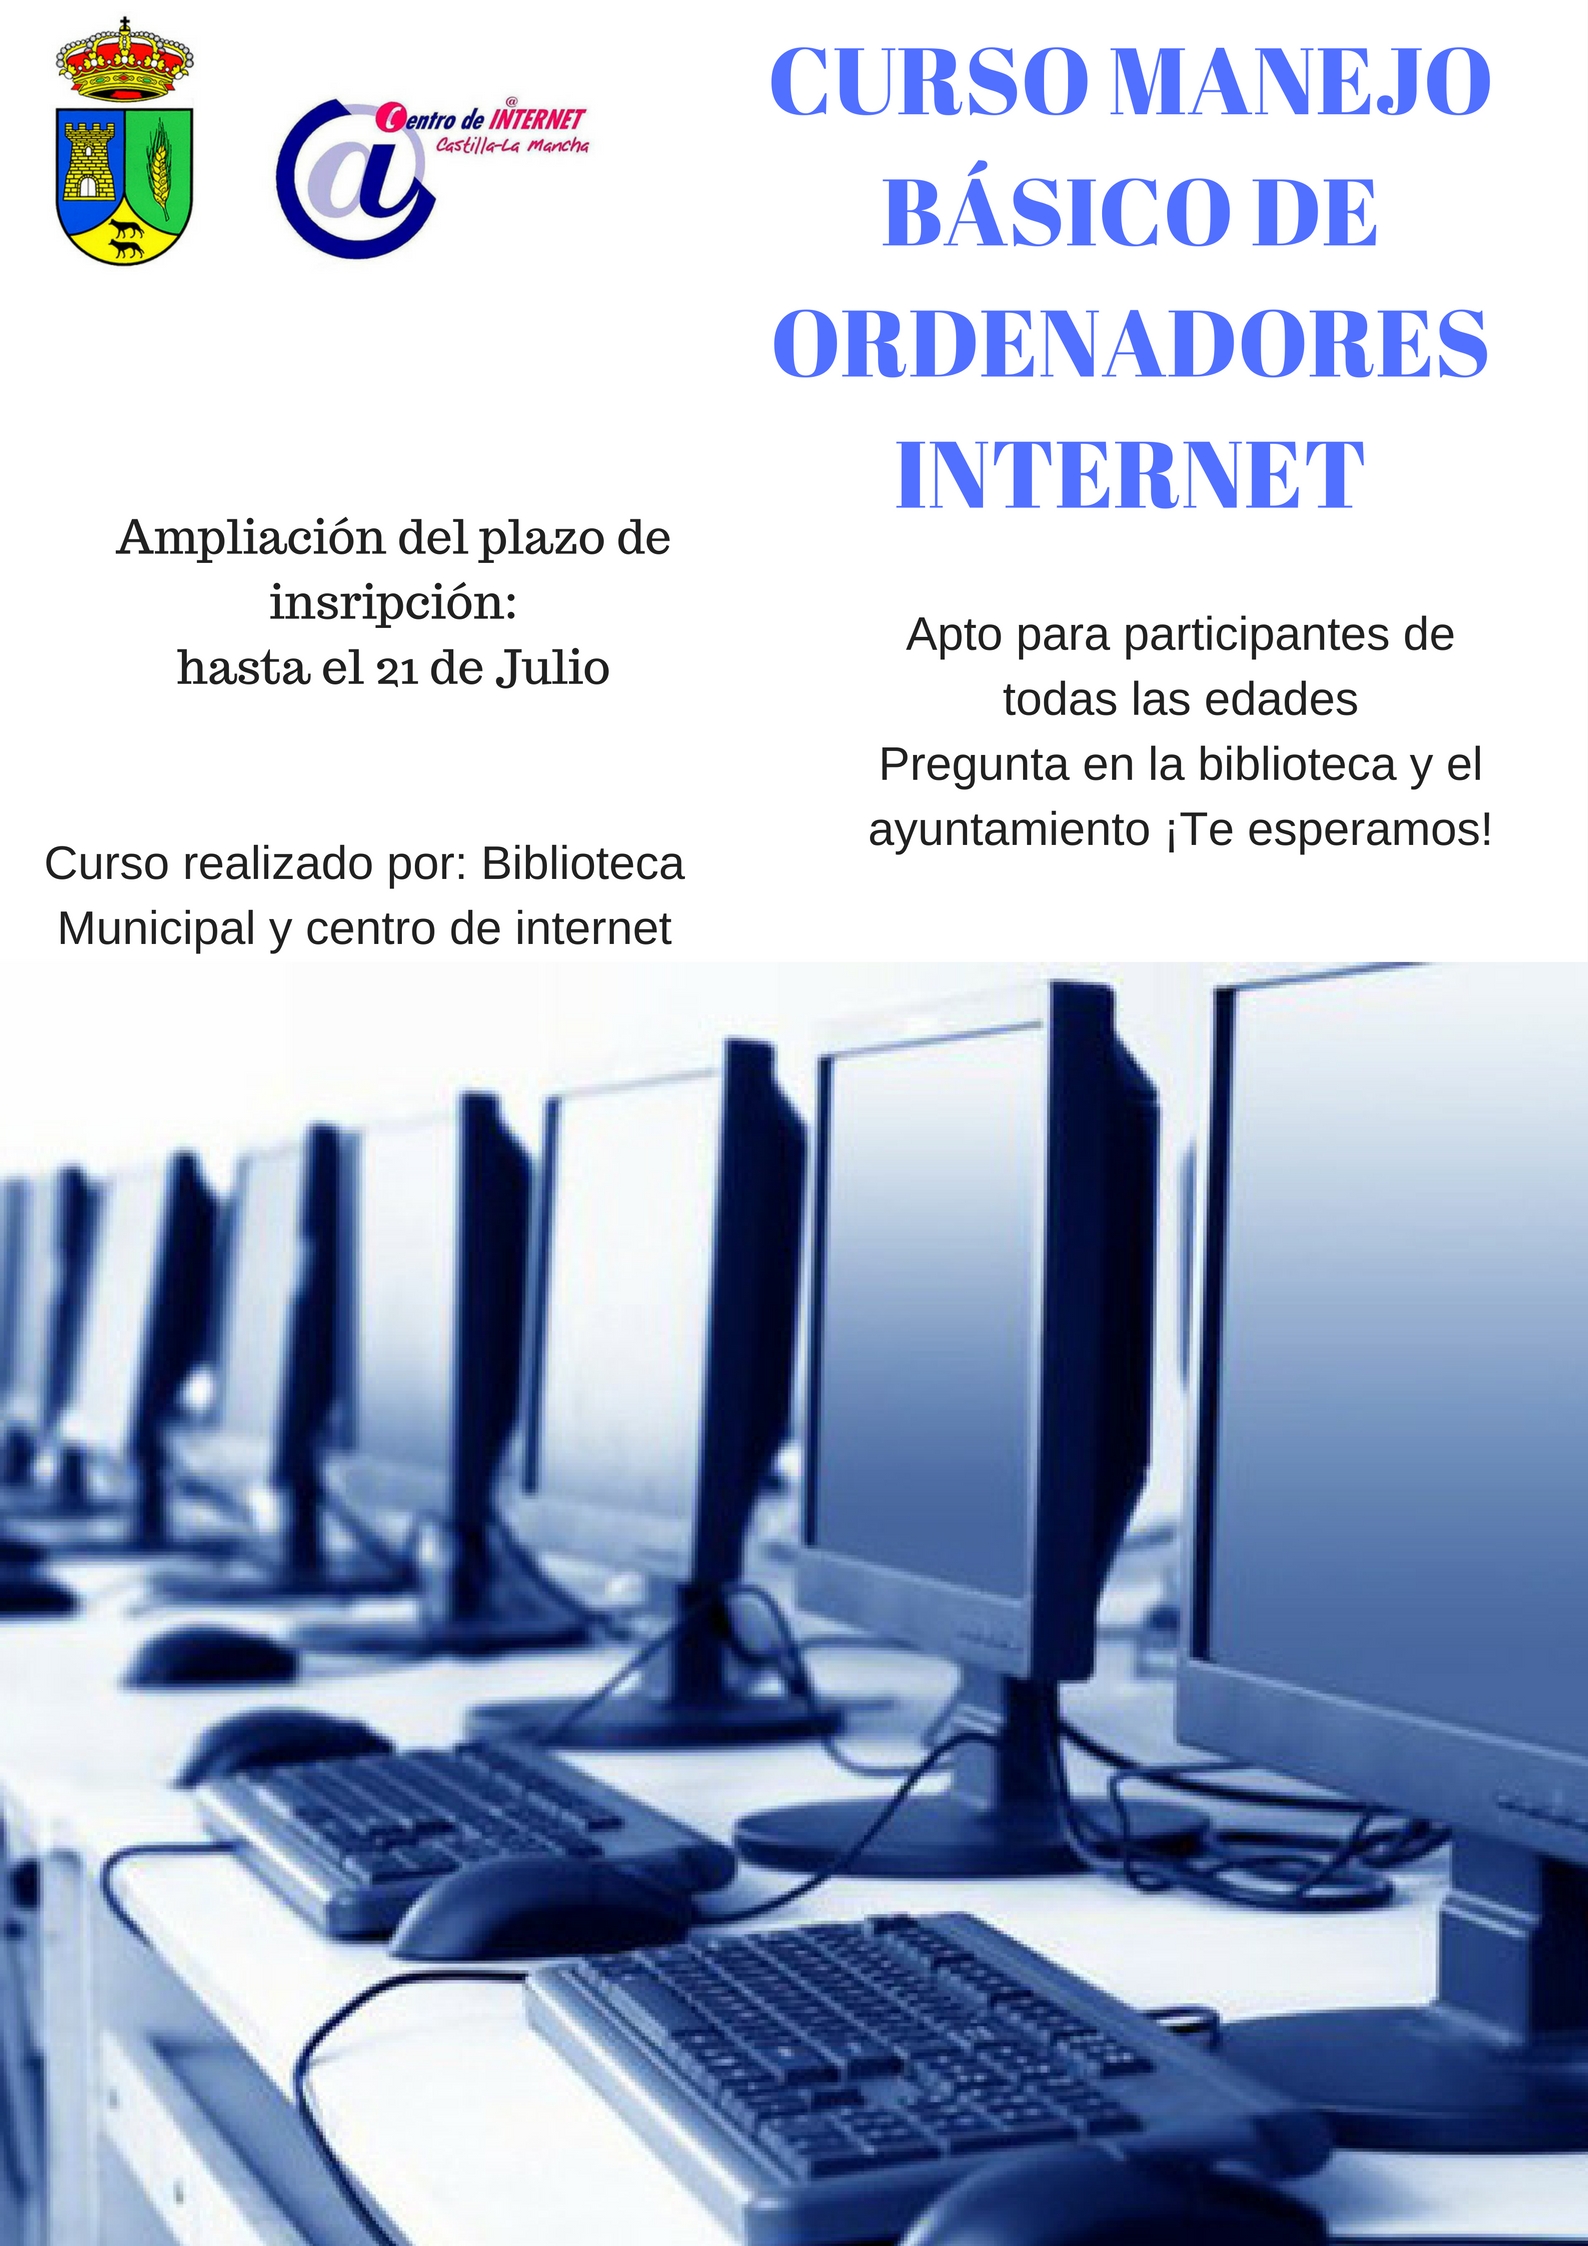 CURSO MANEJO BÁSICO DE ORDENADORES E INTERNET